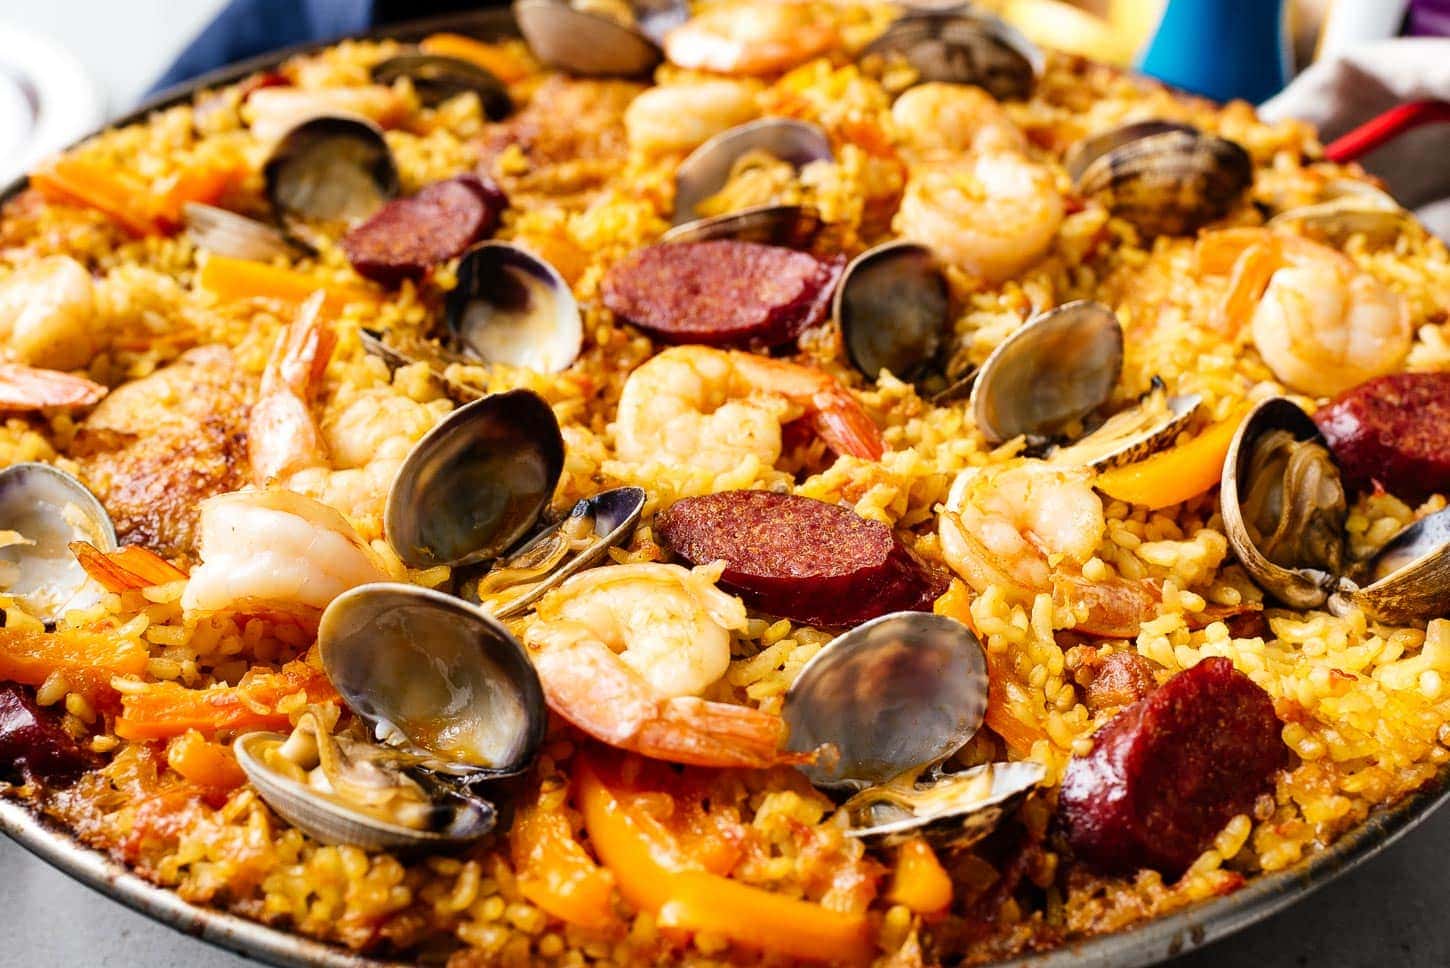 Jasmine Rice For Paella: The Best Option?